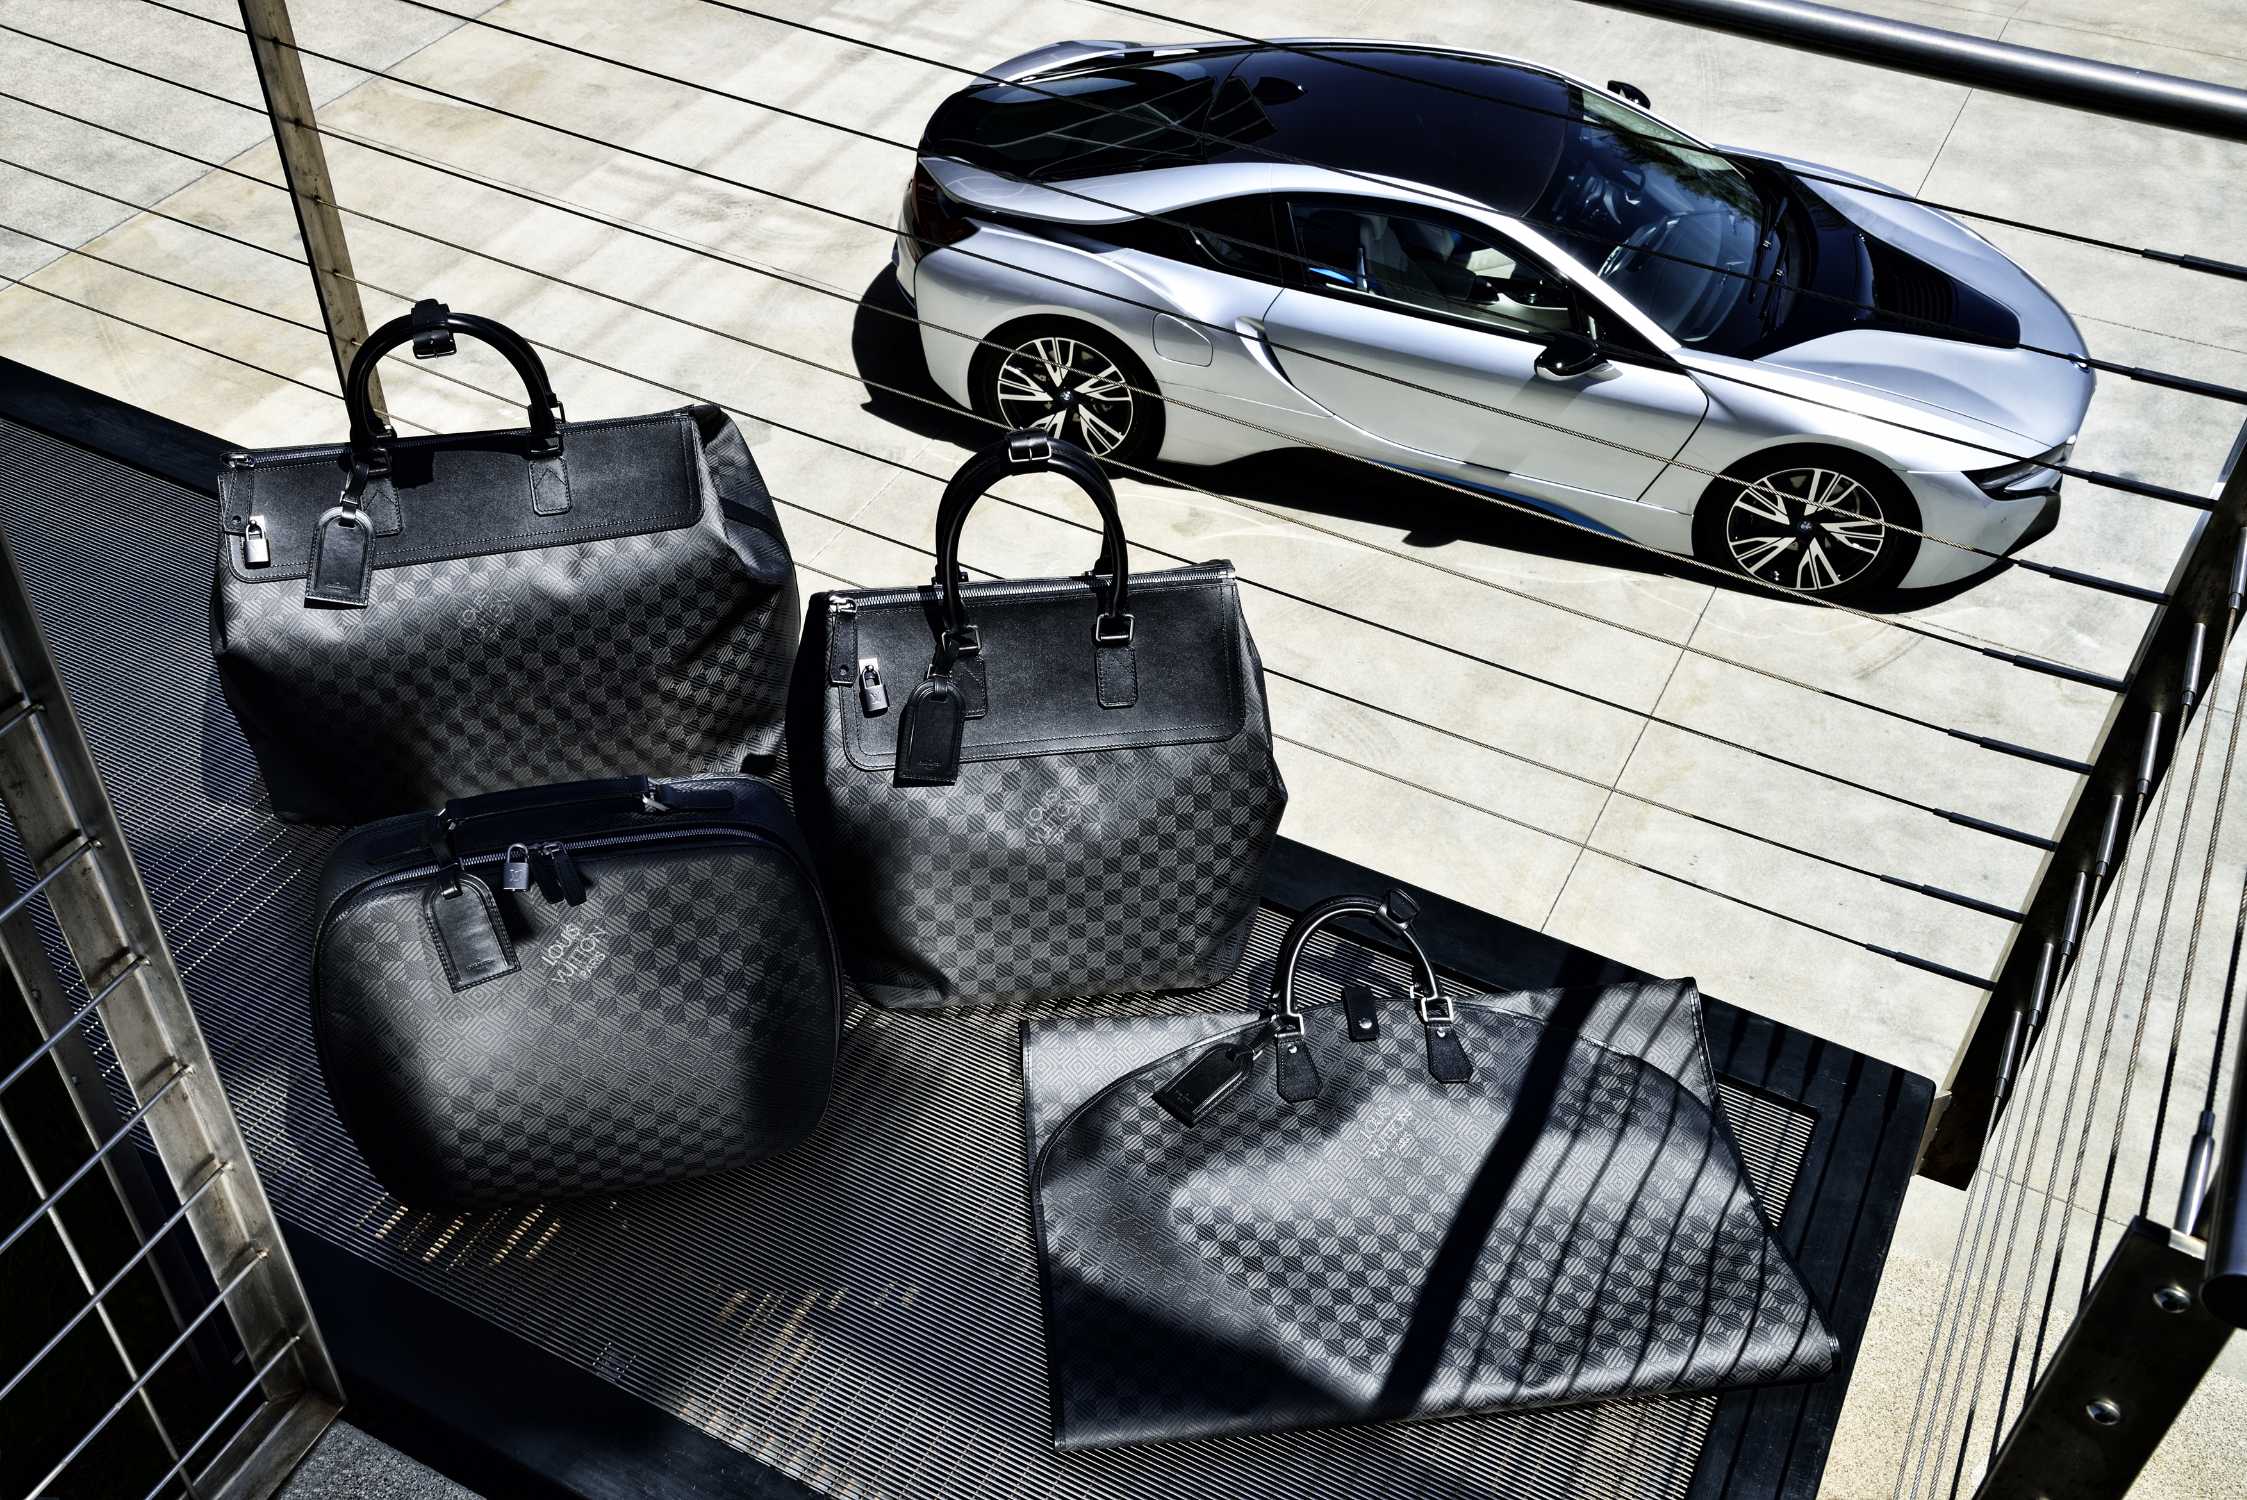 BMW i8 Louis Vuitton Luggage Price $20k BMW i8 Commercial Louis Vuitton Bag  CARJAM TV HD 2016 